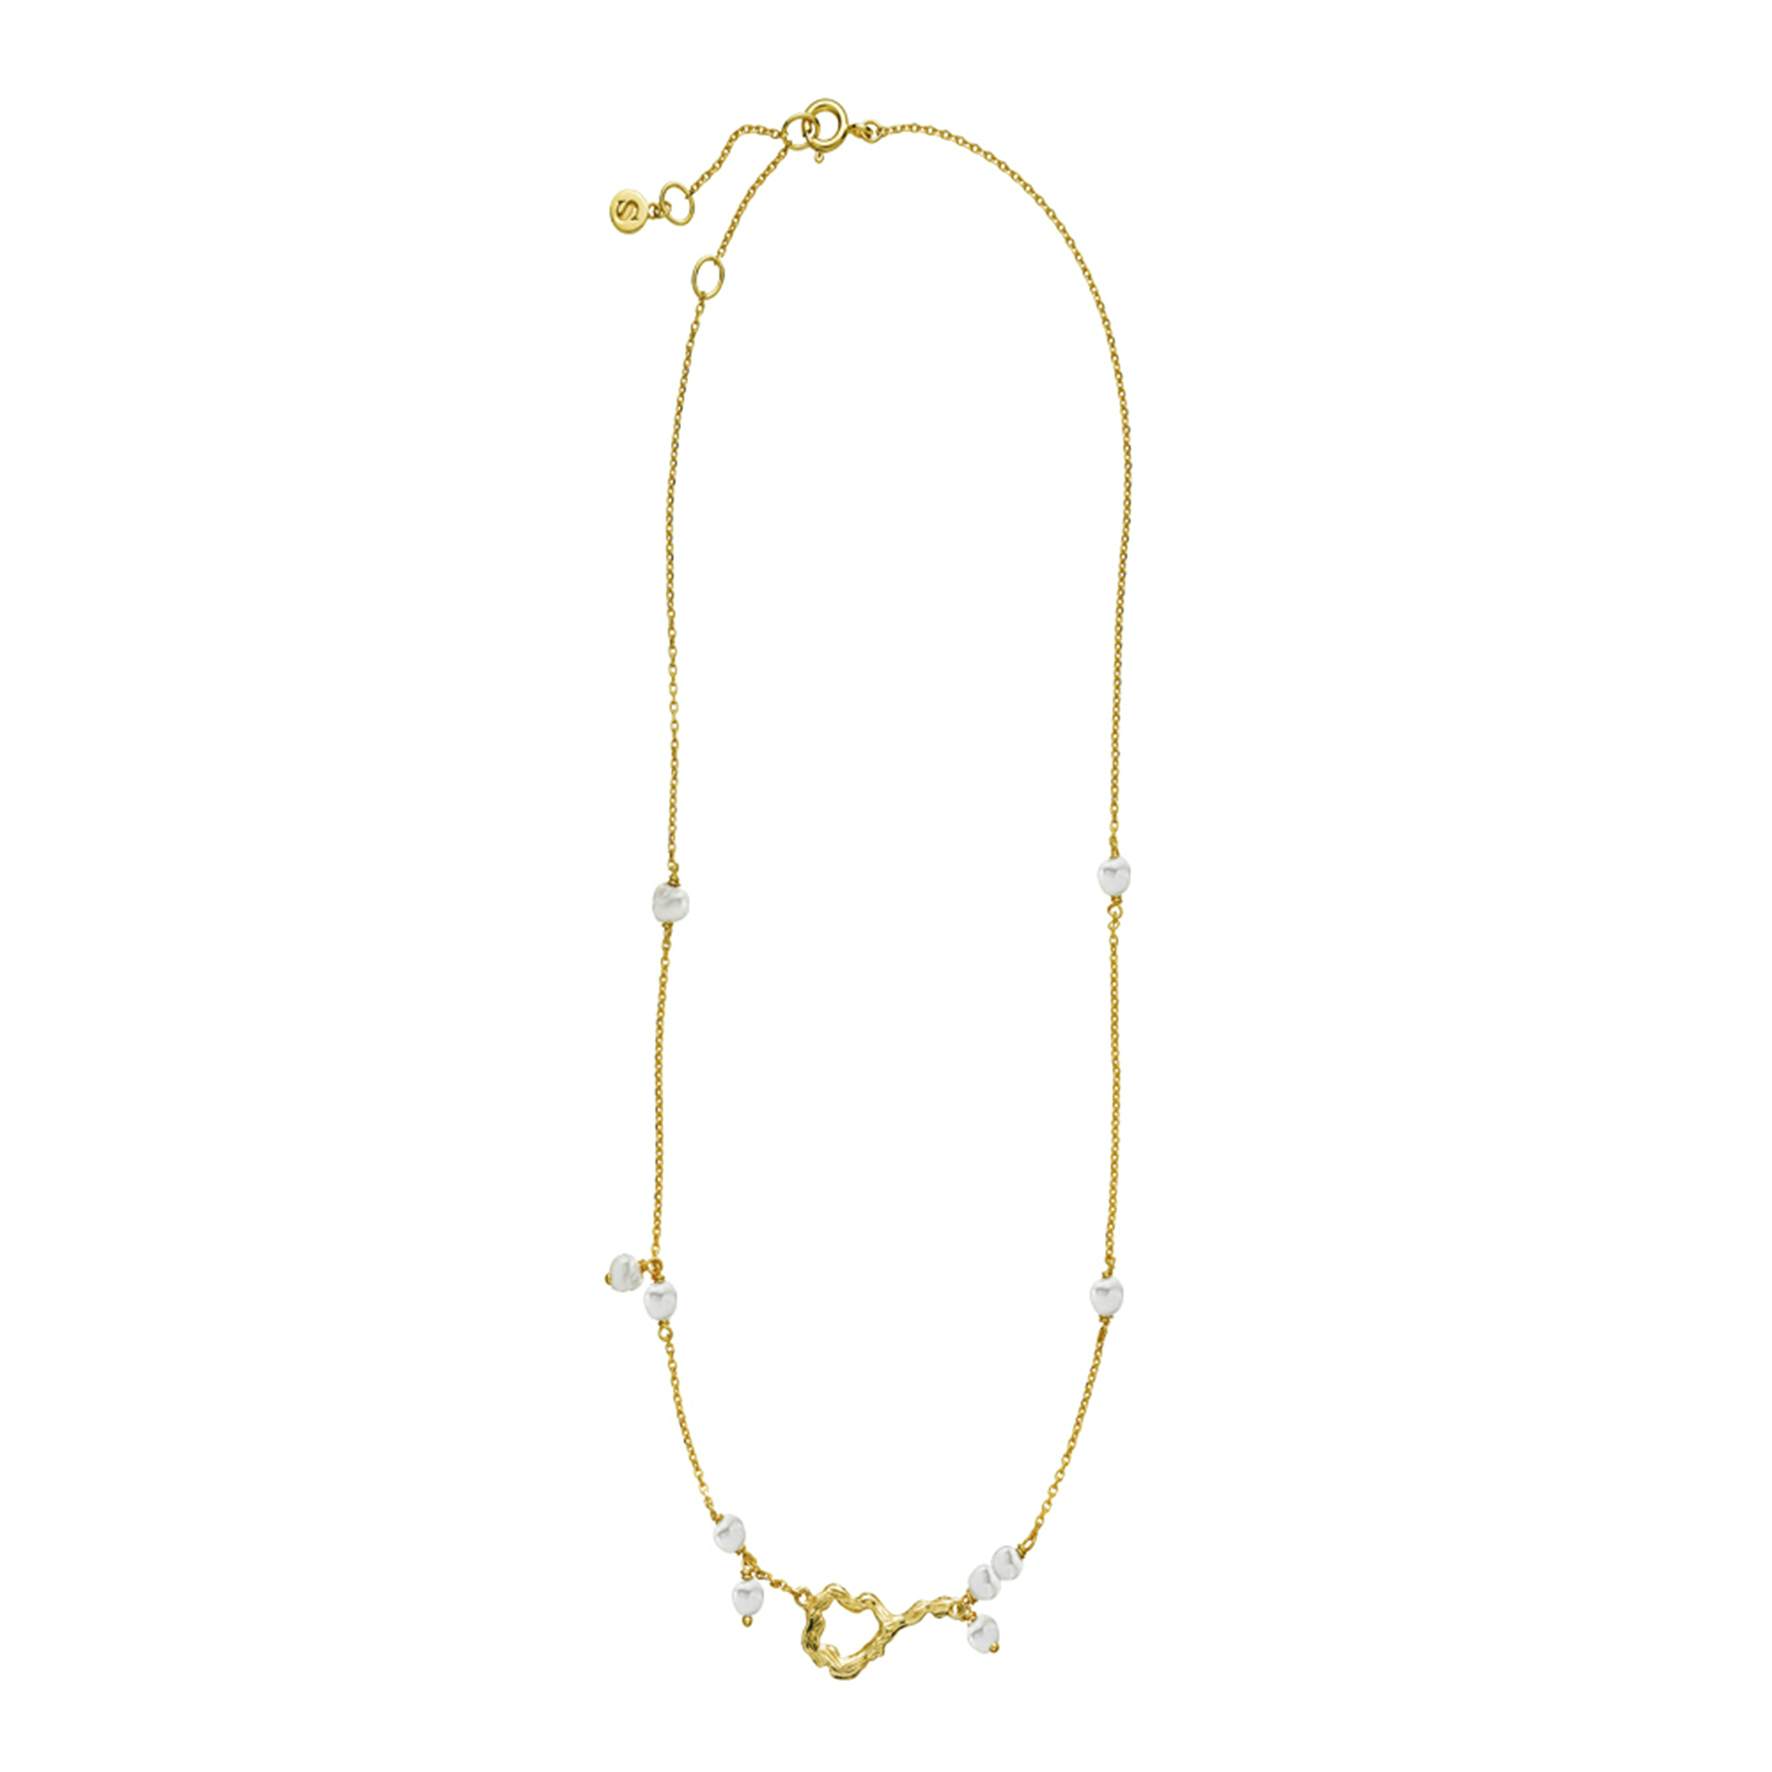 Lærke Bentsen By Sistie Necklace With Pearls von Sistie in Vergoldet-Silber Sterling 925|Freshwater Pearl